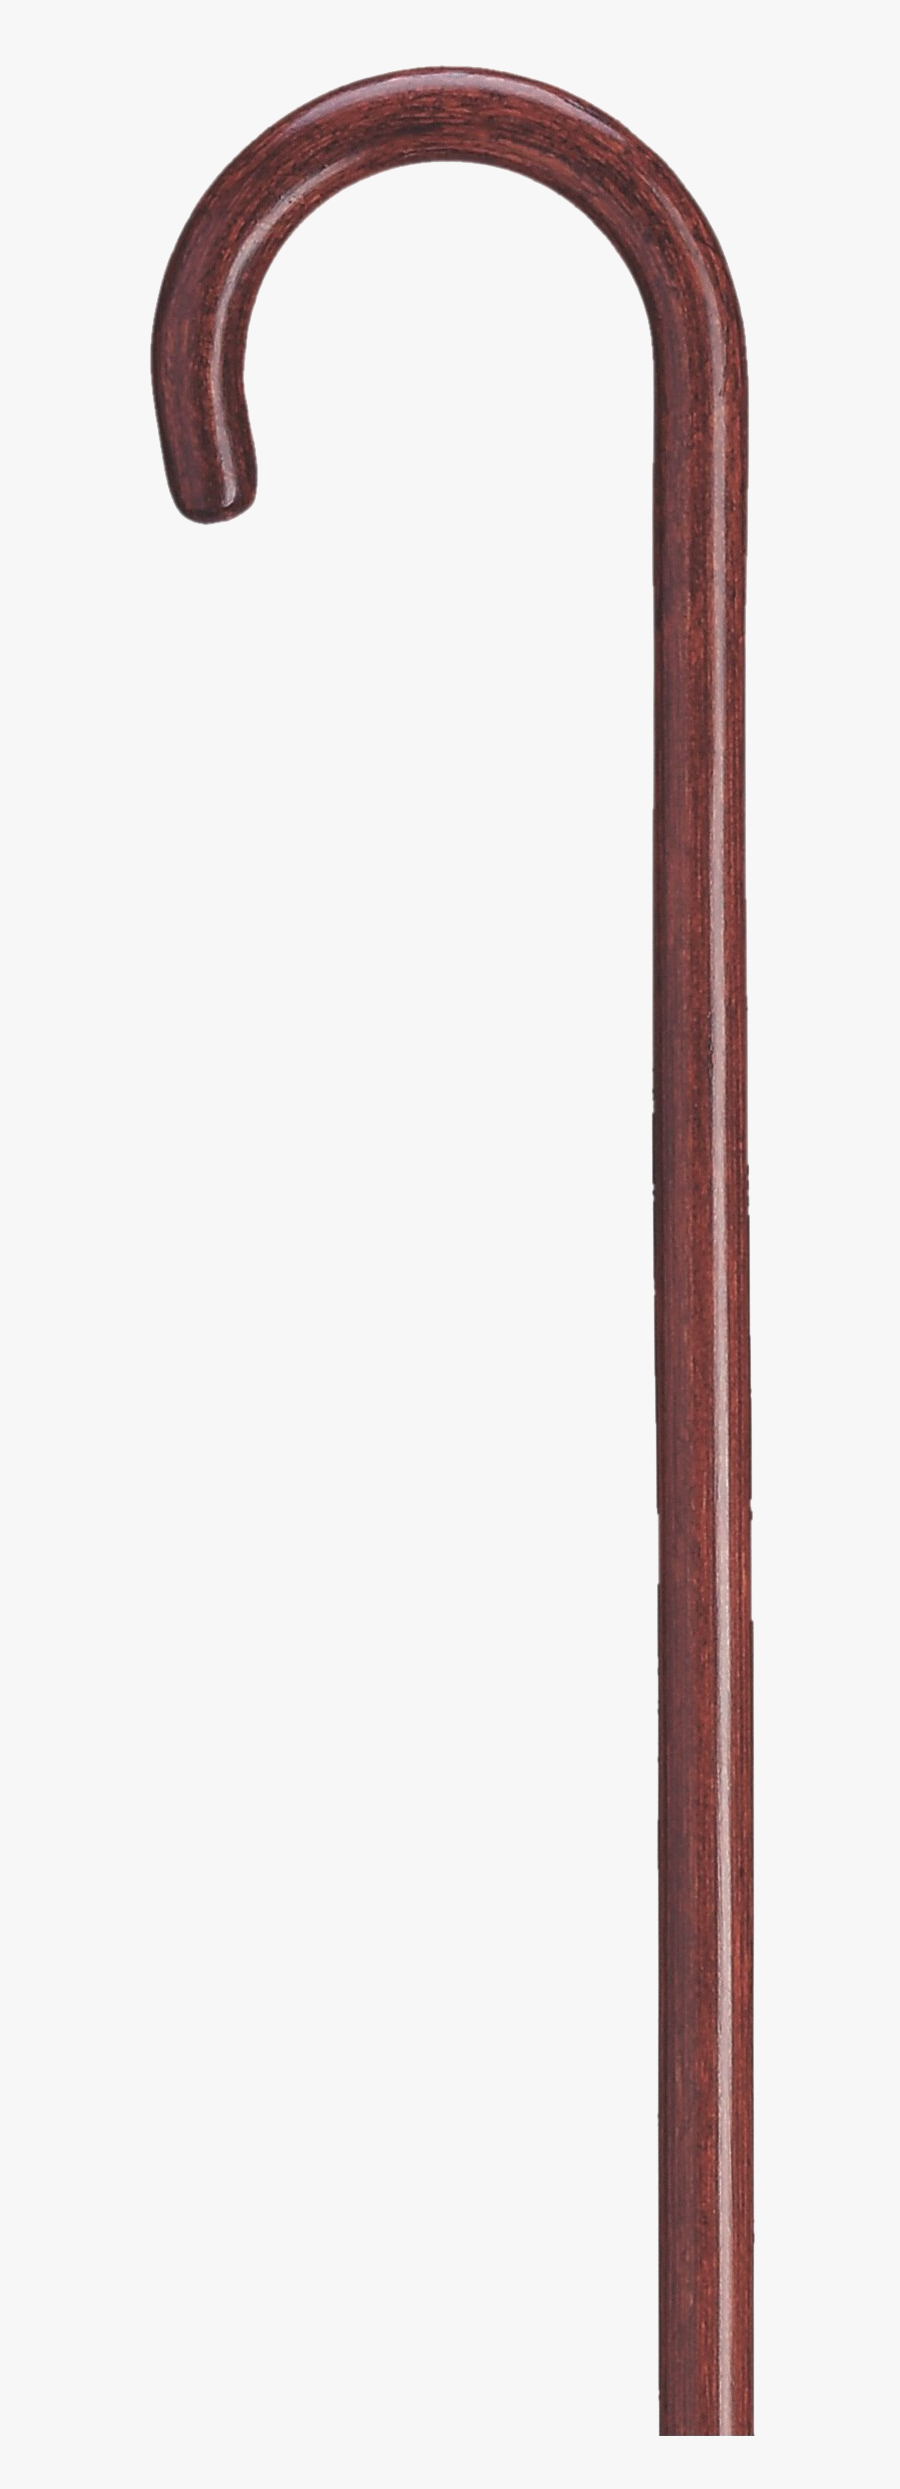 Walking Stick Png - Wood, Transparent Clipart